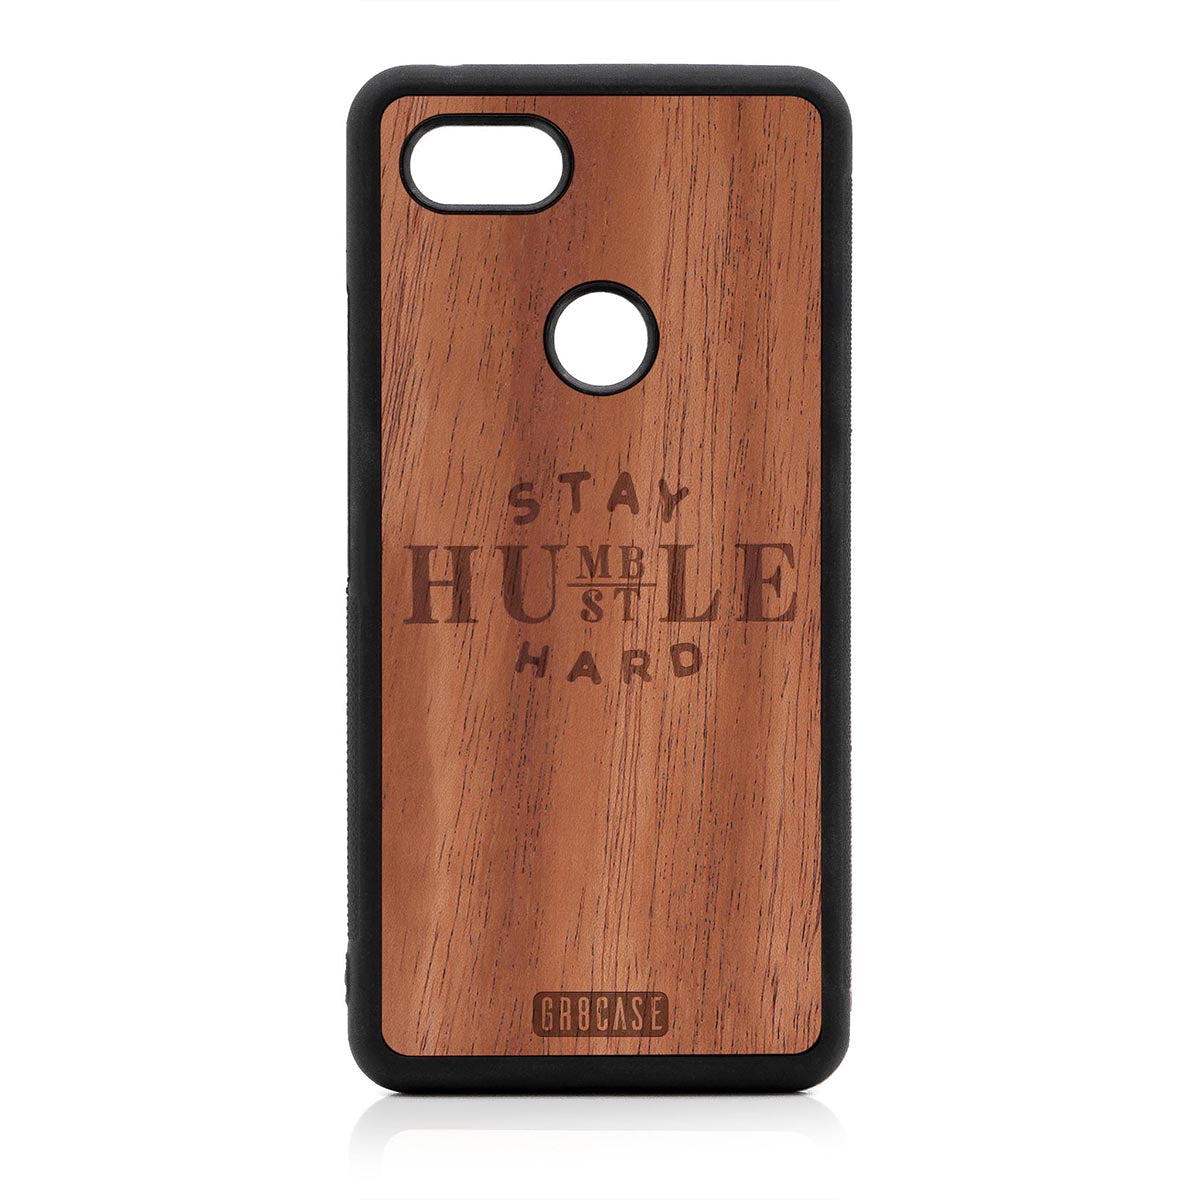 Stay Humble Hustle Hard Design Wood Case Google Pixel 3A XL by GR8CASE